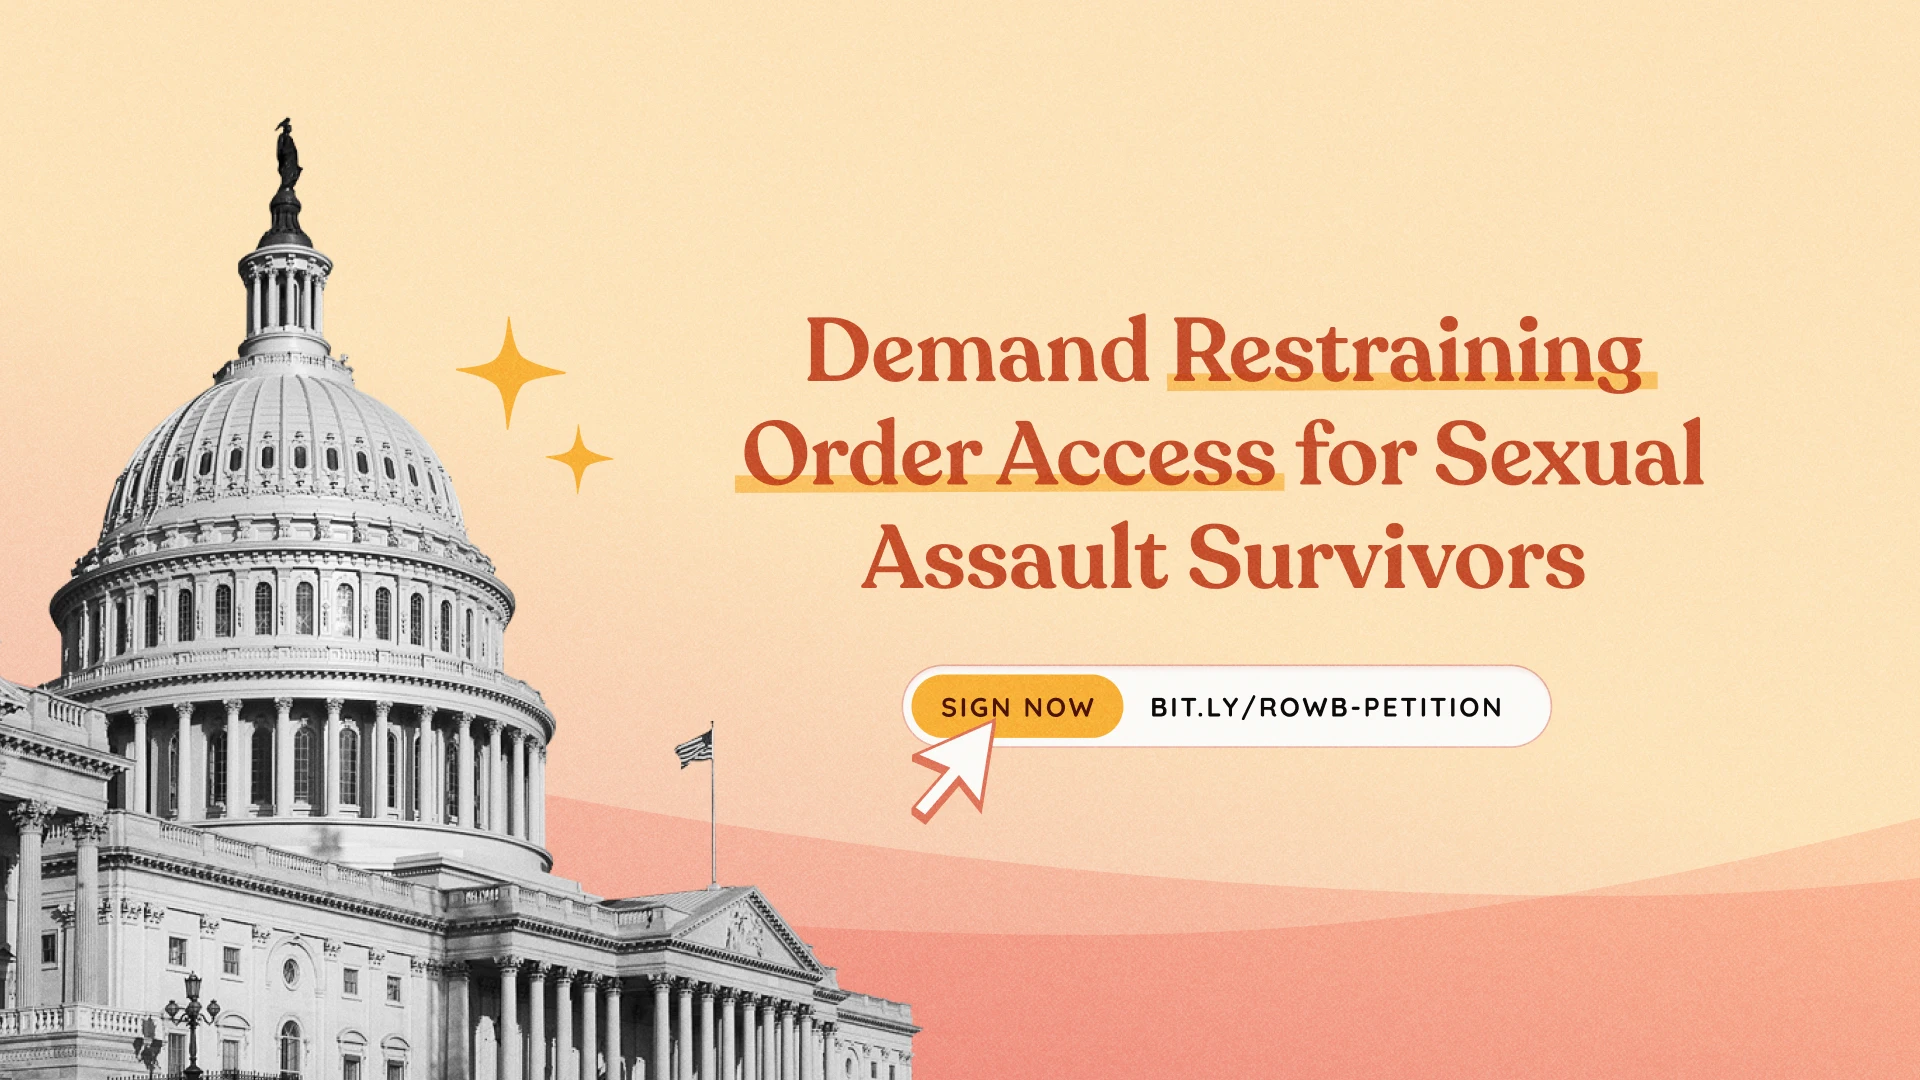 Demand Restraining Order Access for Sexual Assault Survivors